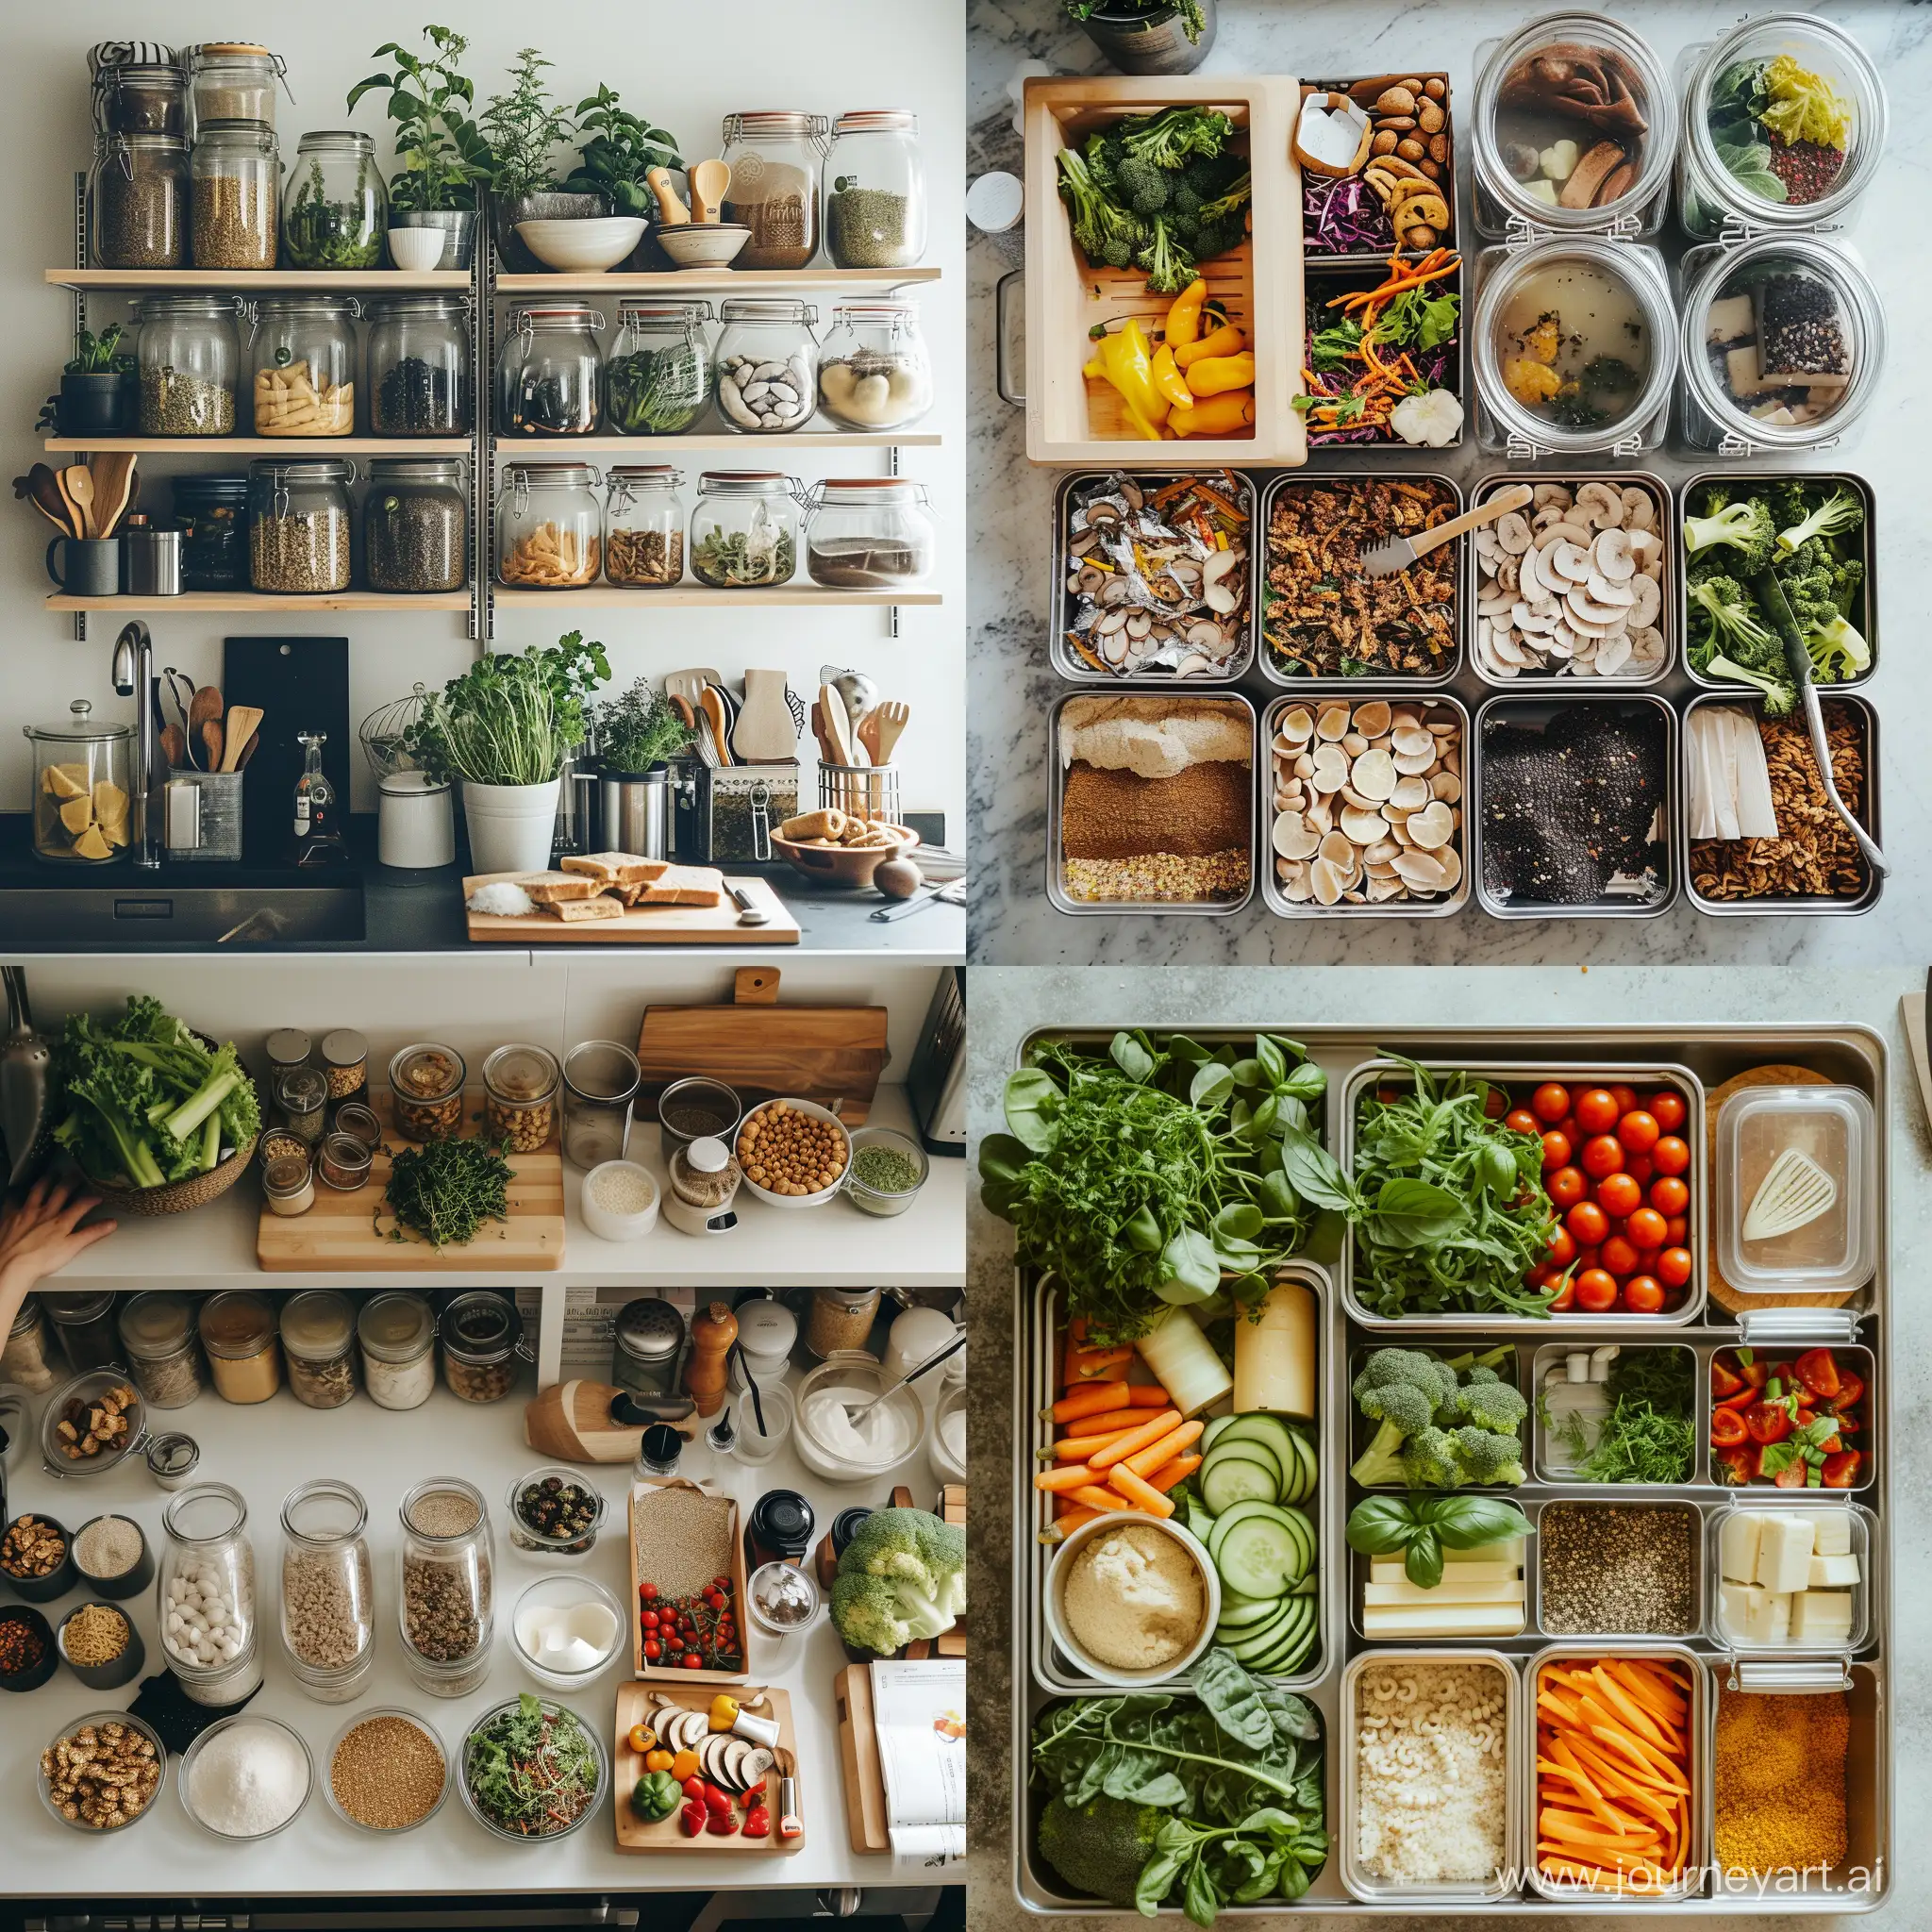 Zero-Waste Kitchen Challenge: Can You Do It?